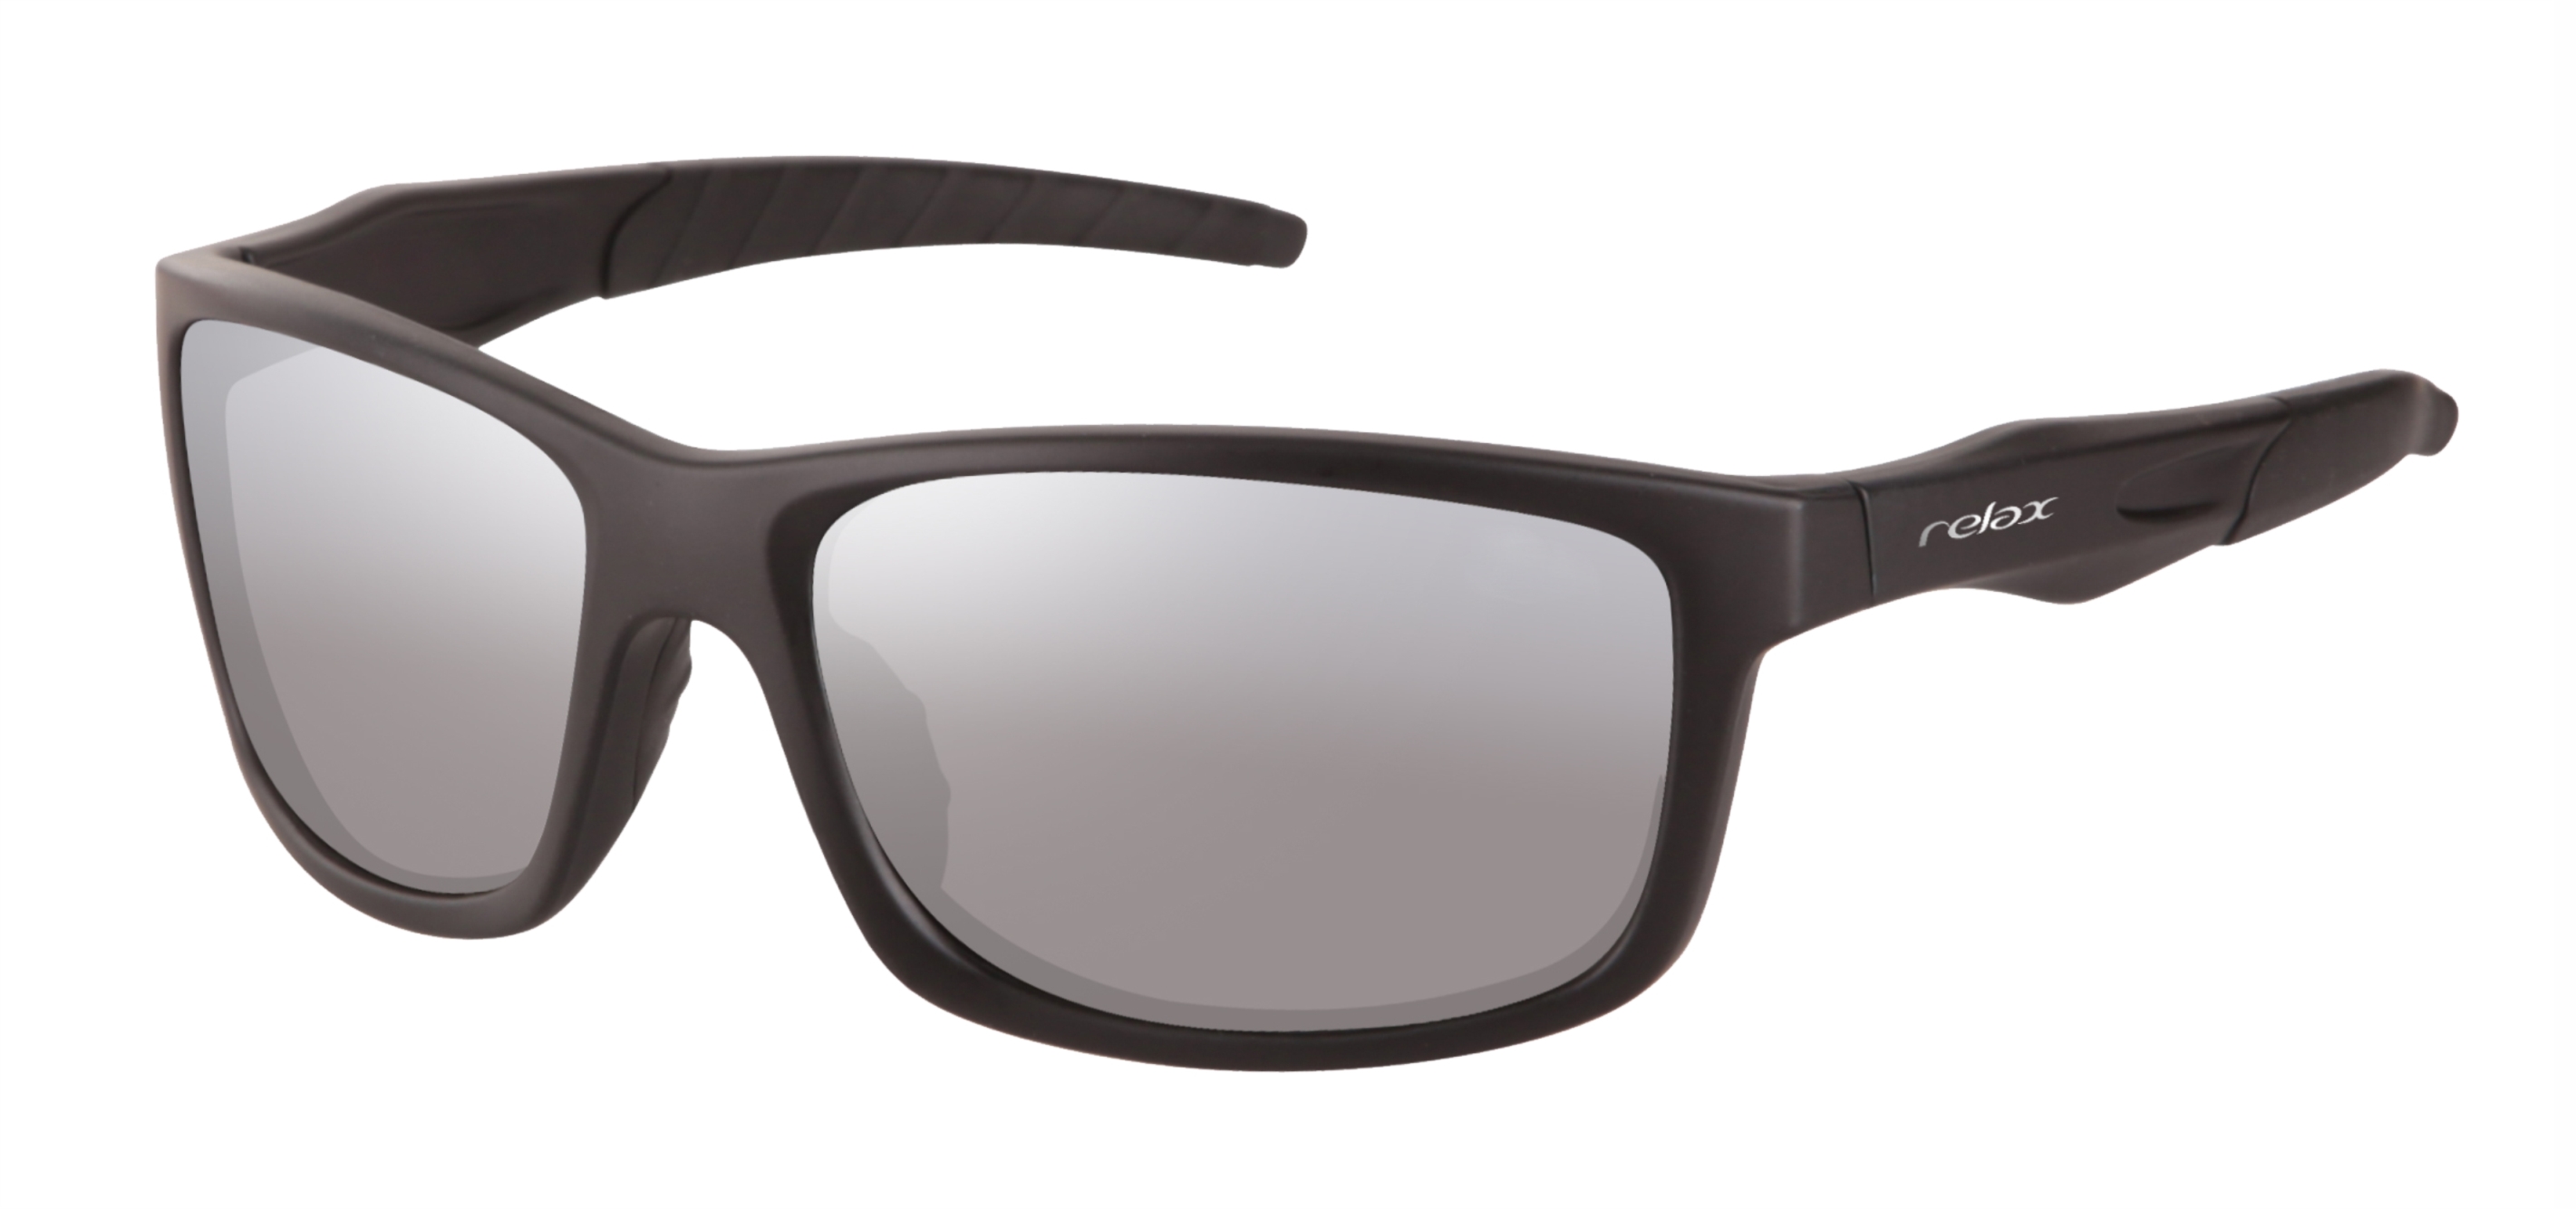 Polarized sport sunglasses  Gaga Relax R5394M standard